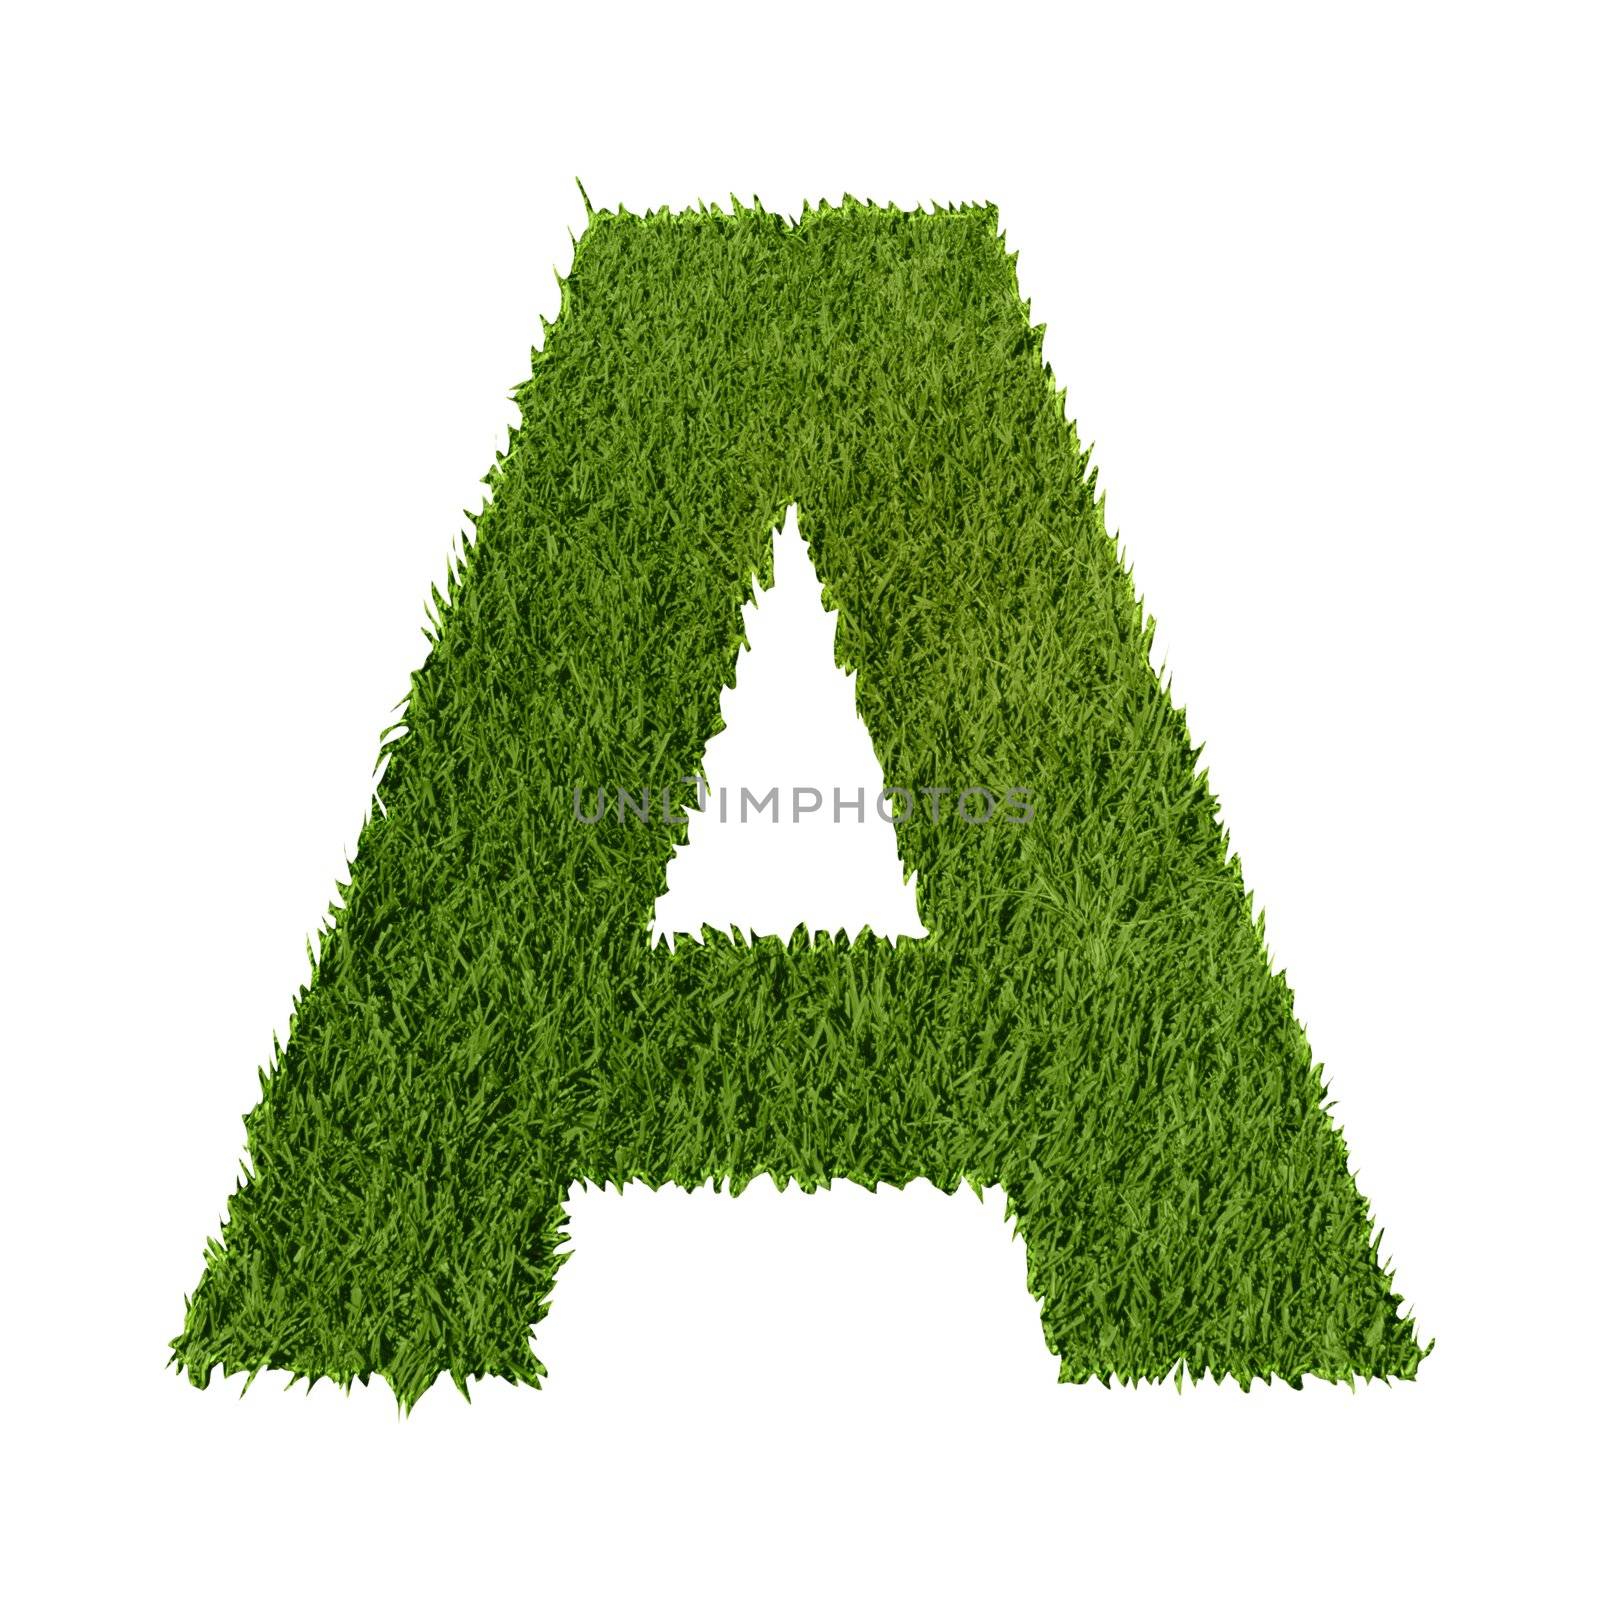 Green grass letter A by rusak